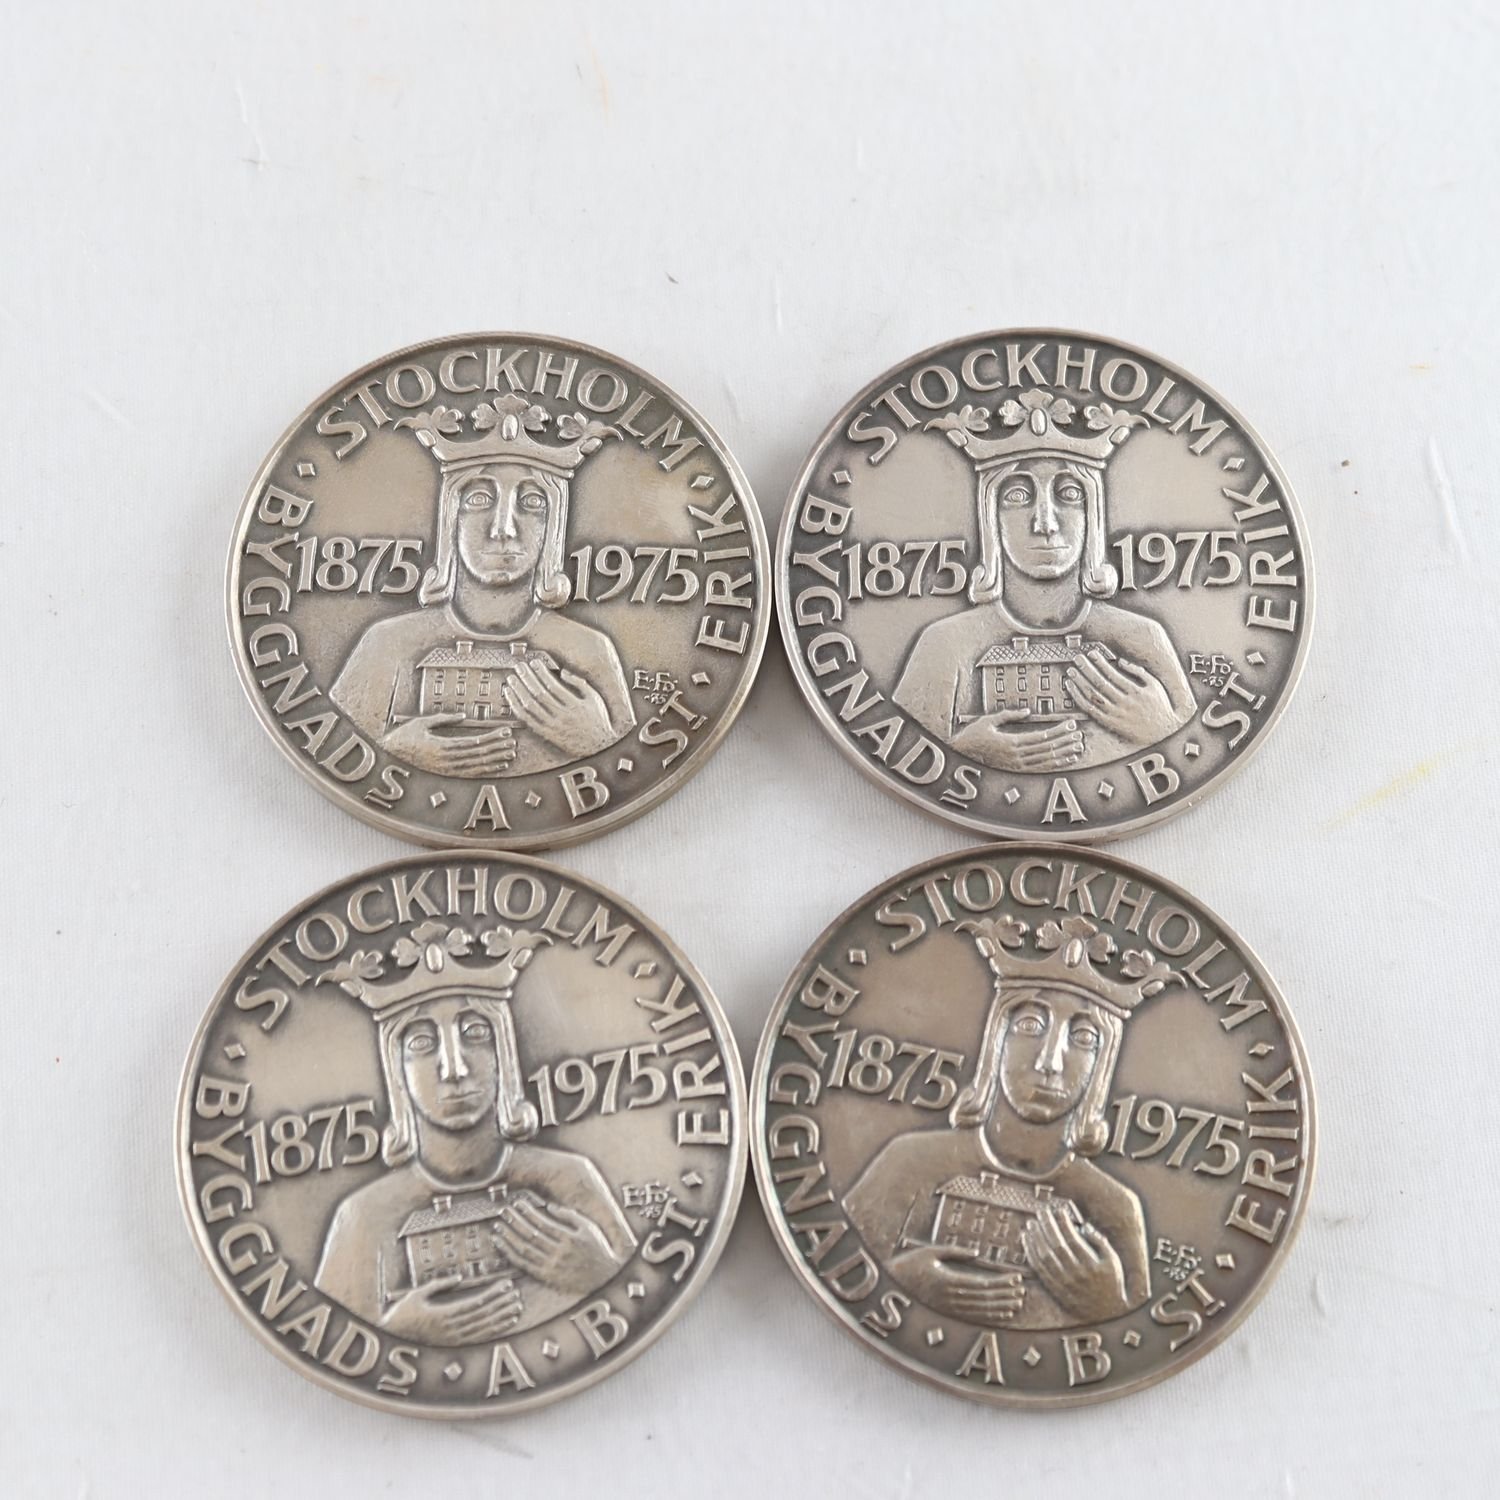 Minnesmynt, silver, kattfot, Stockholms arbetarehem, 1875-1975, 4 st.